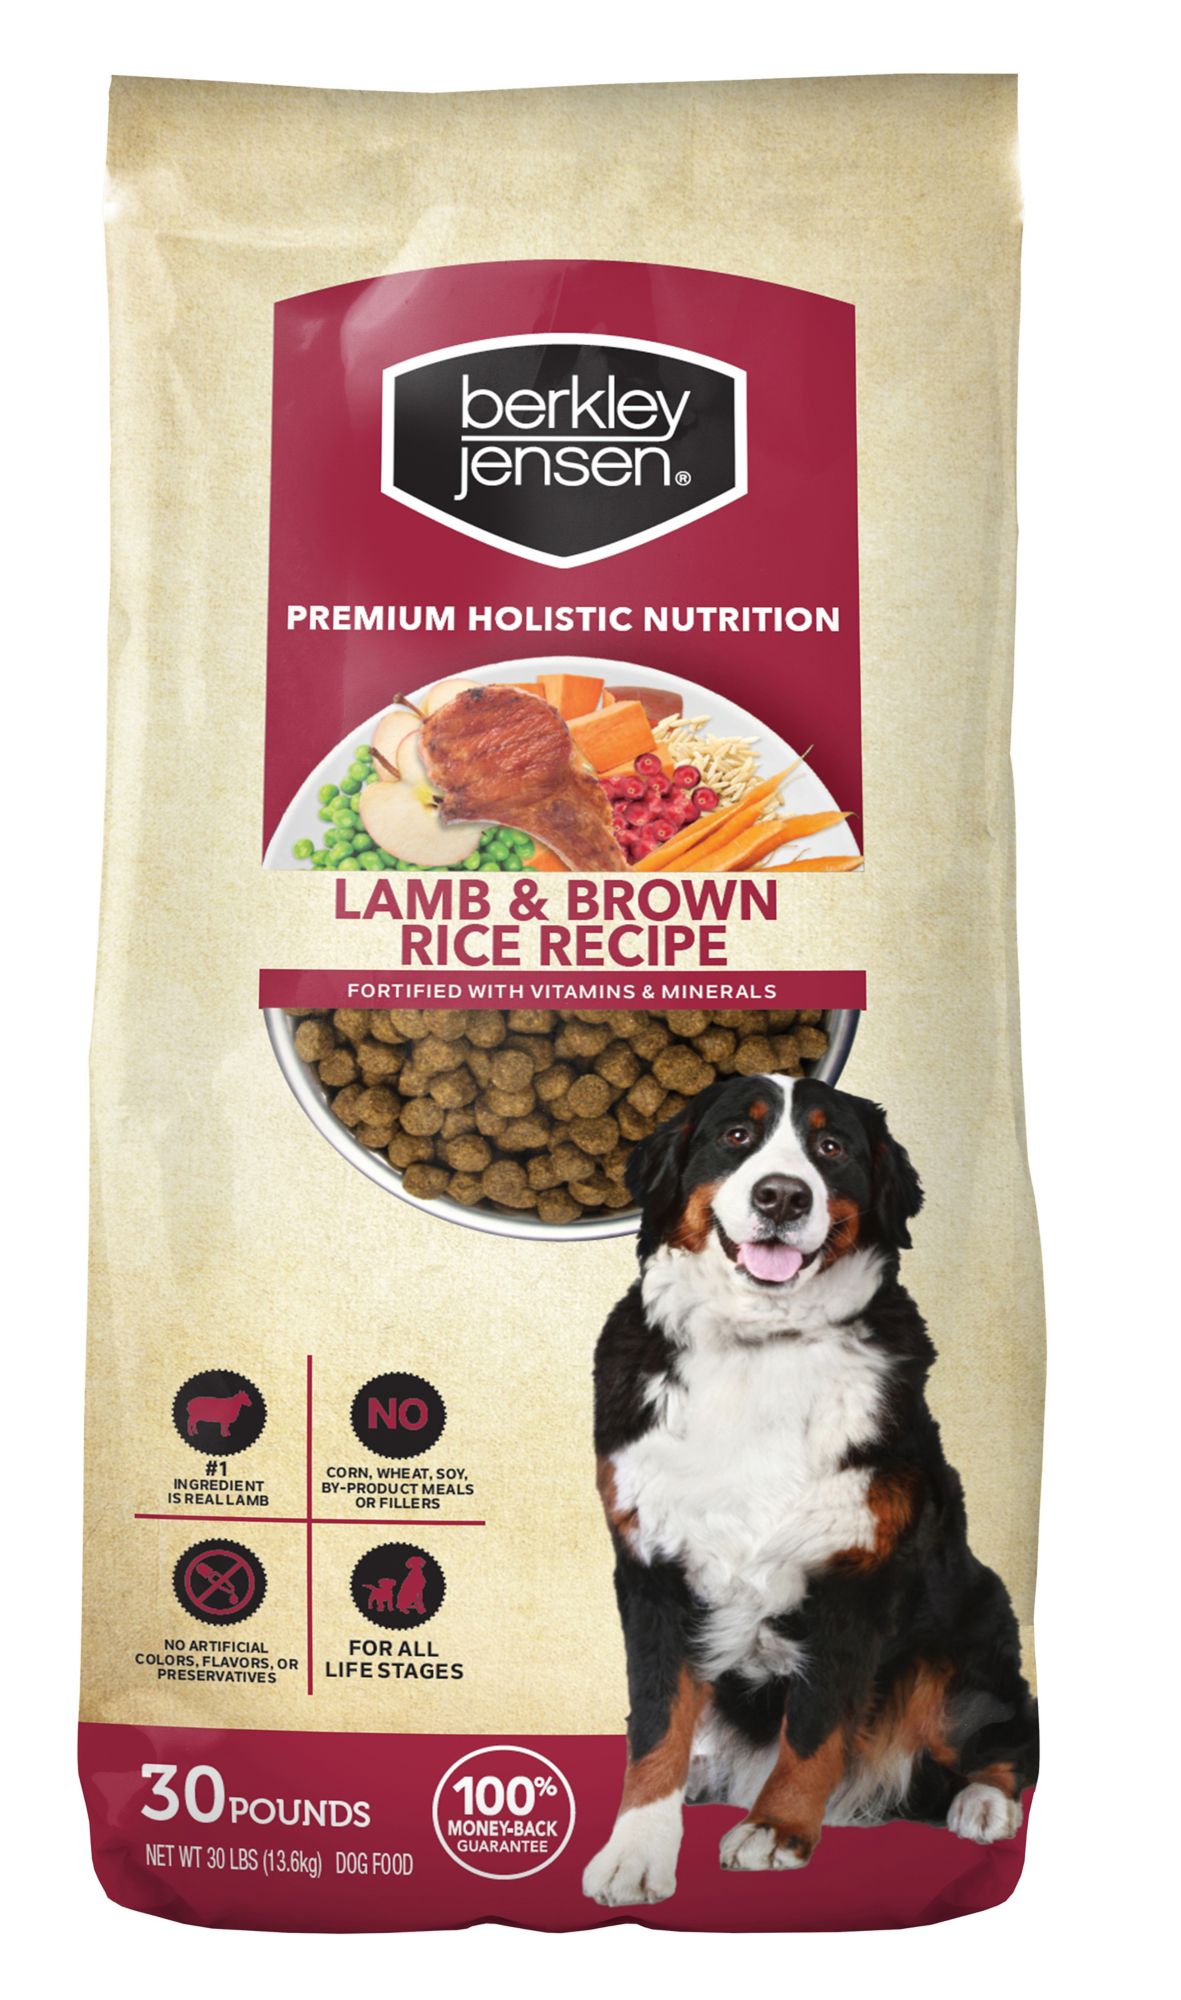 Berkley Jensen Premium Holistic Nutrition Lamb and Brown Rice Dry Dog Food, 30 lbs.